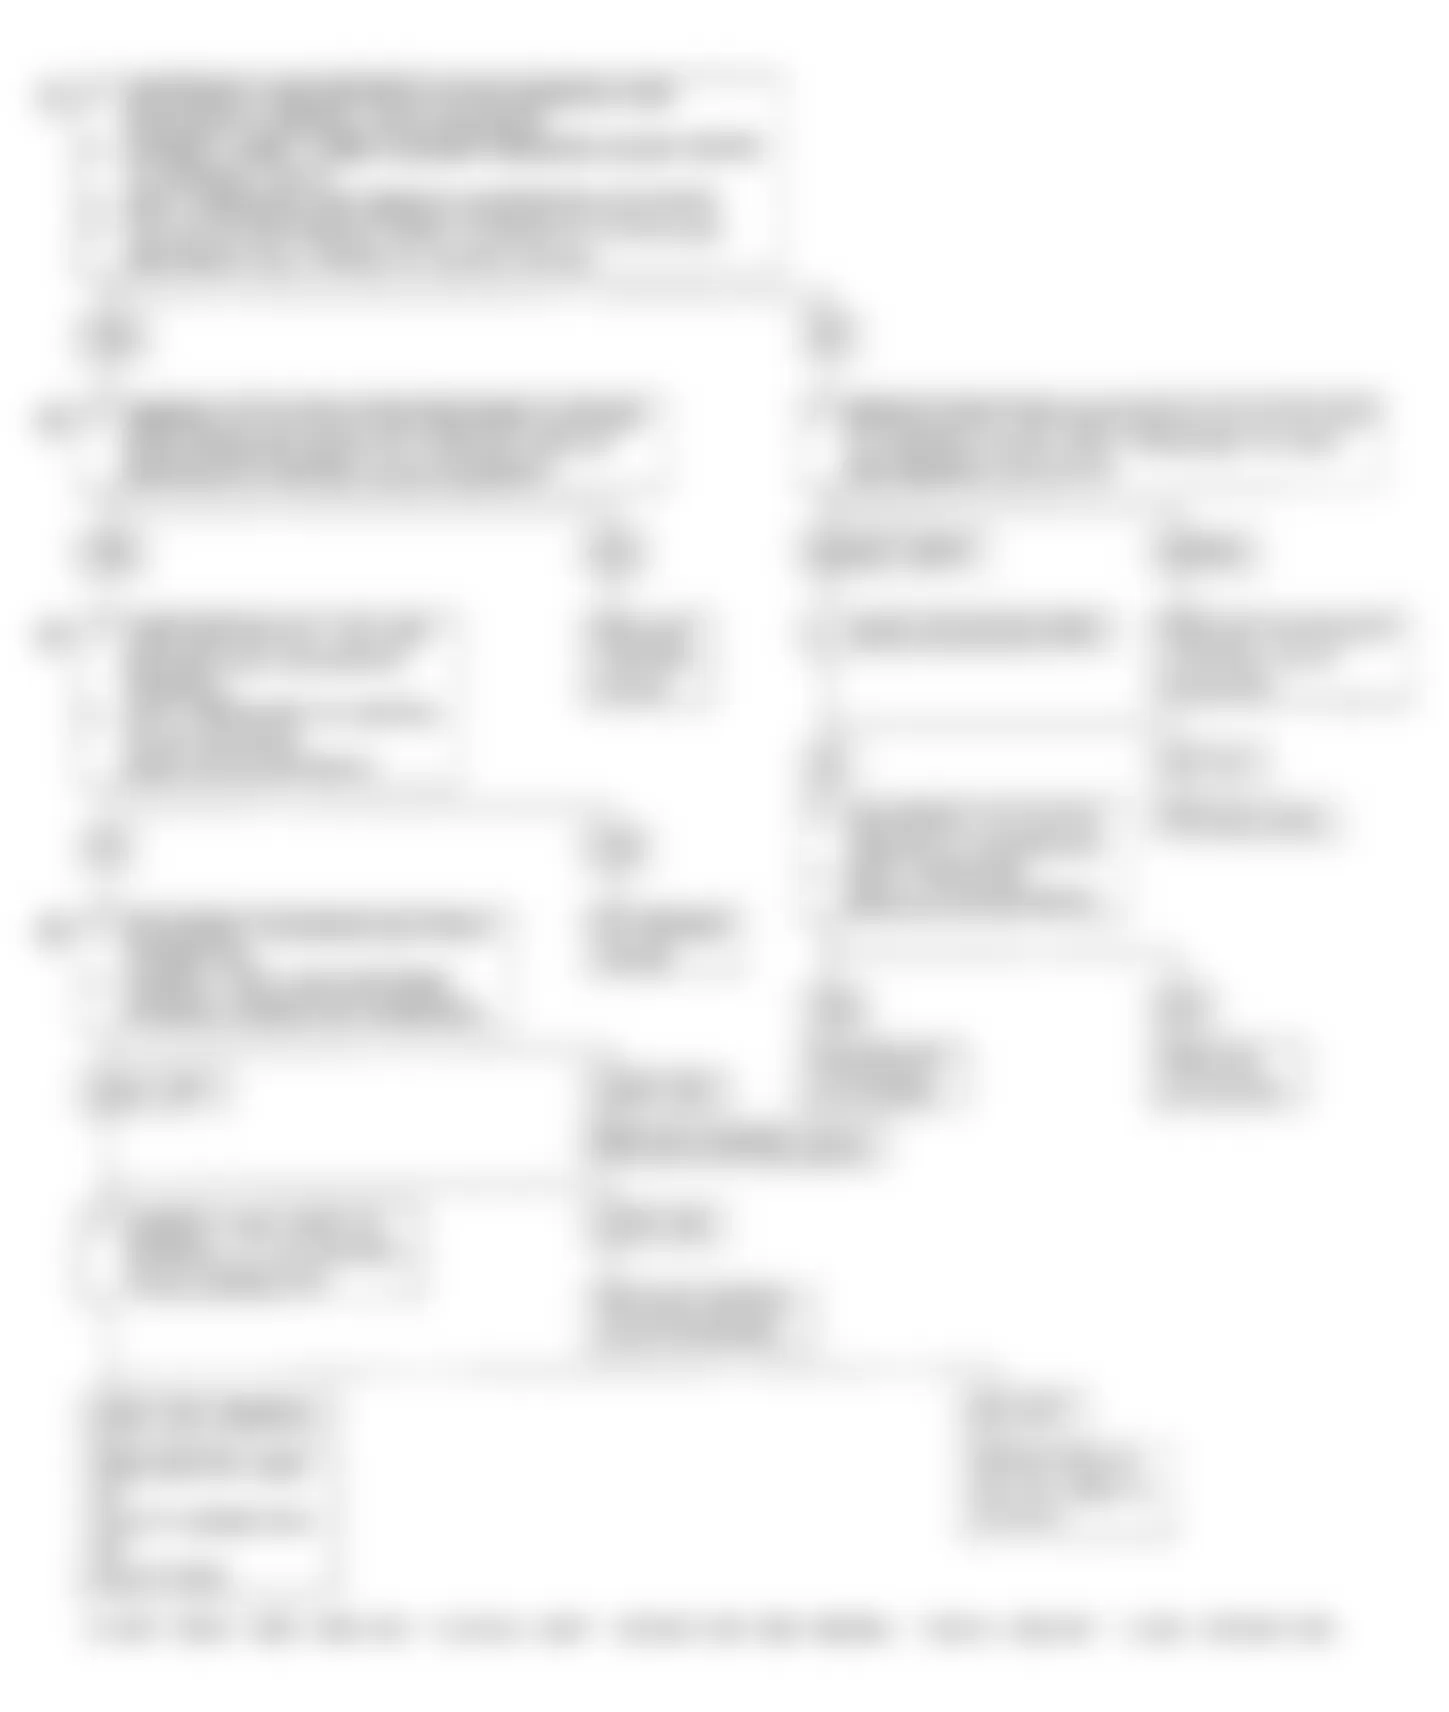 Isuzu Stylus XS 1991 - Component Locations -  Code 31 Flow Chart-Turbo Overboost (Turbo)